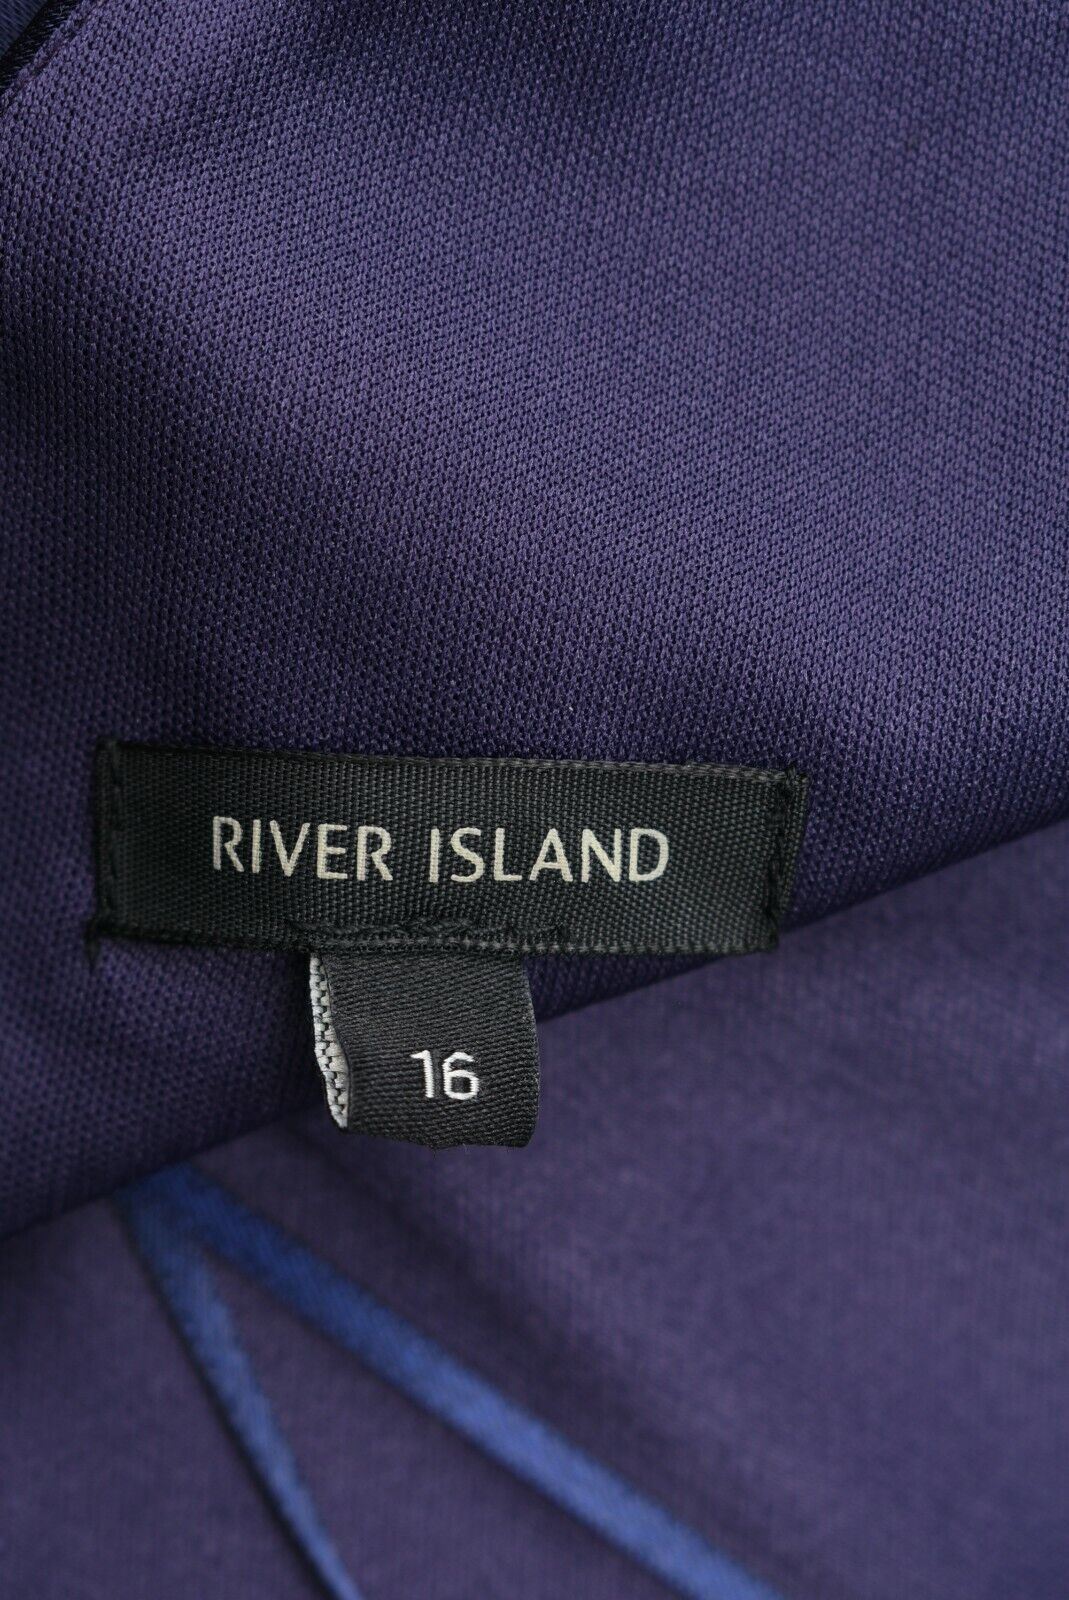 RIVER ISLAND Women's Cut Out Dress, Navy Blue, size UK 16